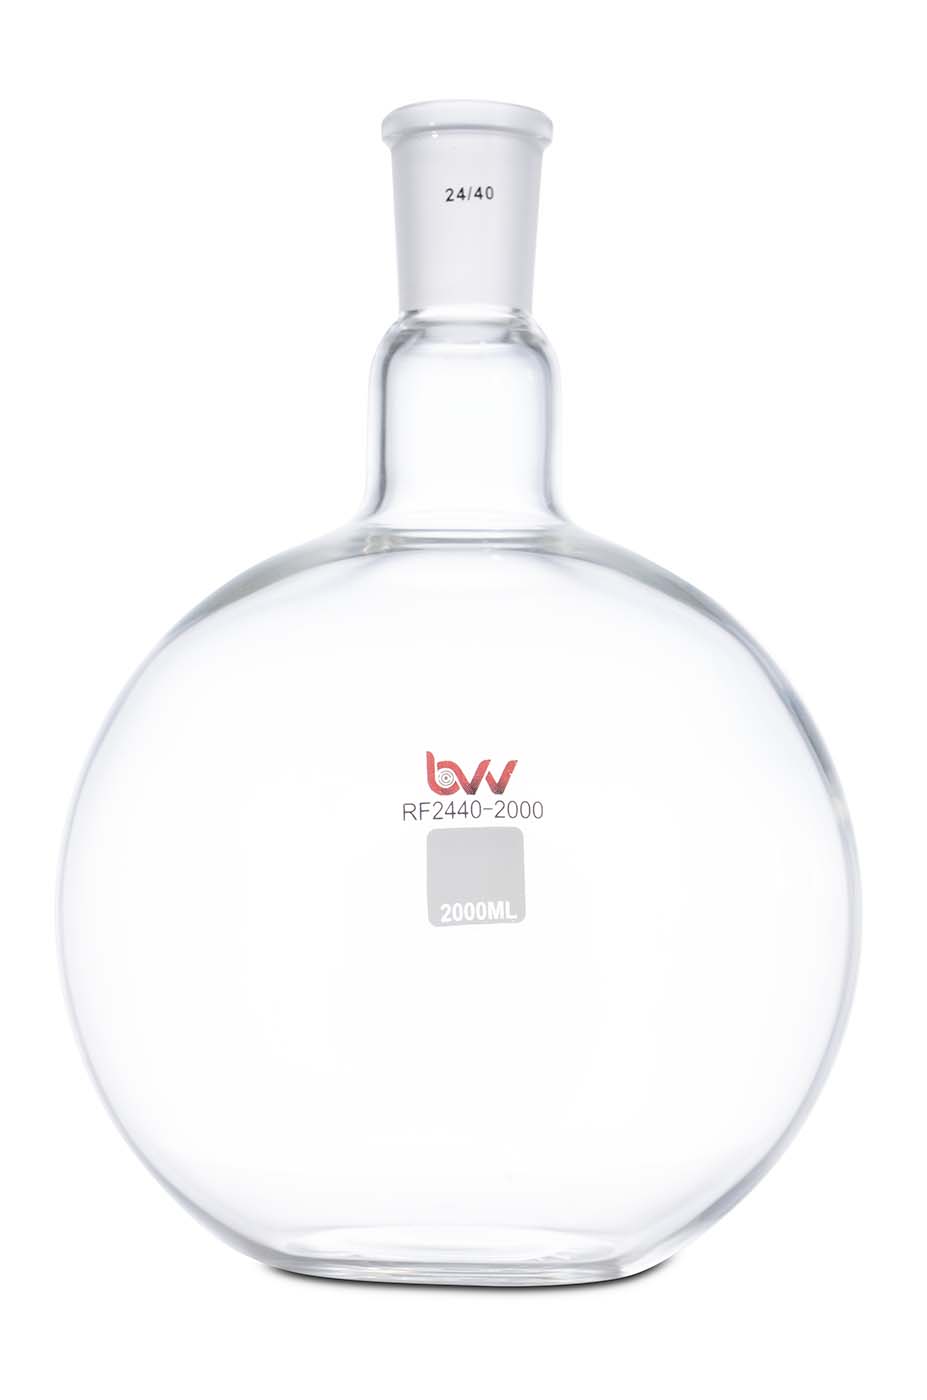 Single Neck Round Bottom Flask Shop All Categories BVV 2000ml